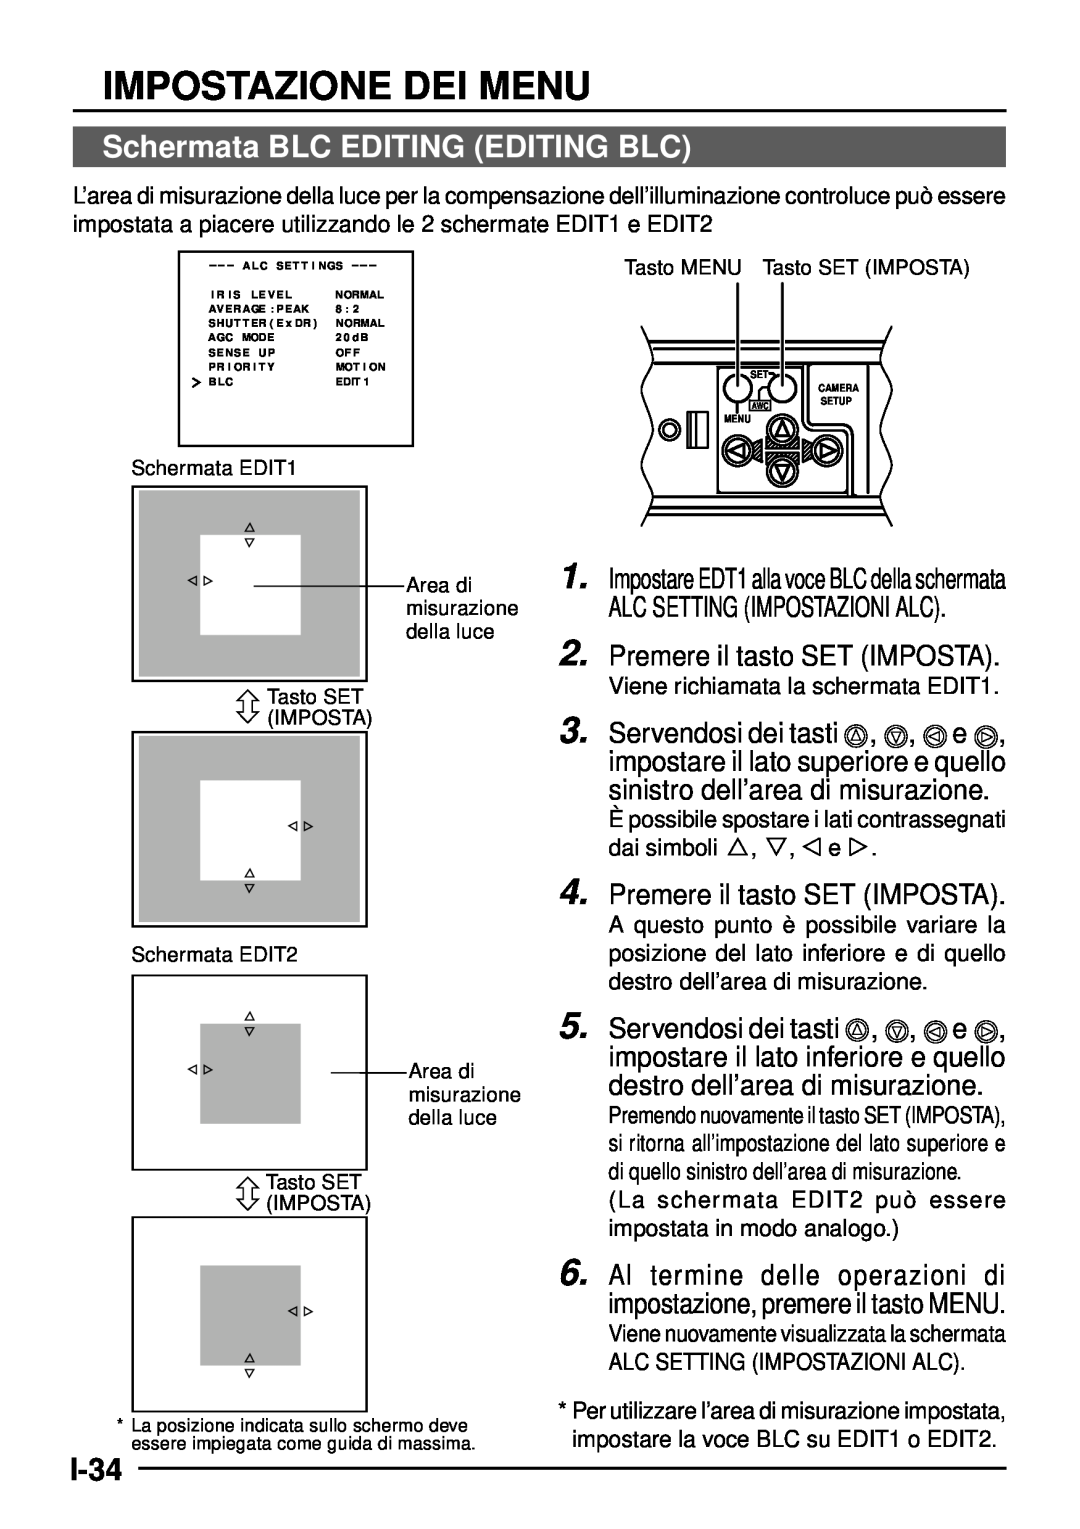 JVC TK-C1460 manual Schermata BLC EDITING EDITING BLC, I-34, ALC SETTING IMPOSTAZIONI ALC 2. Premere il tasto SET IMPOSTA 